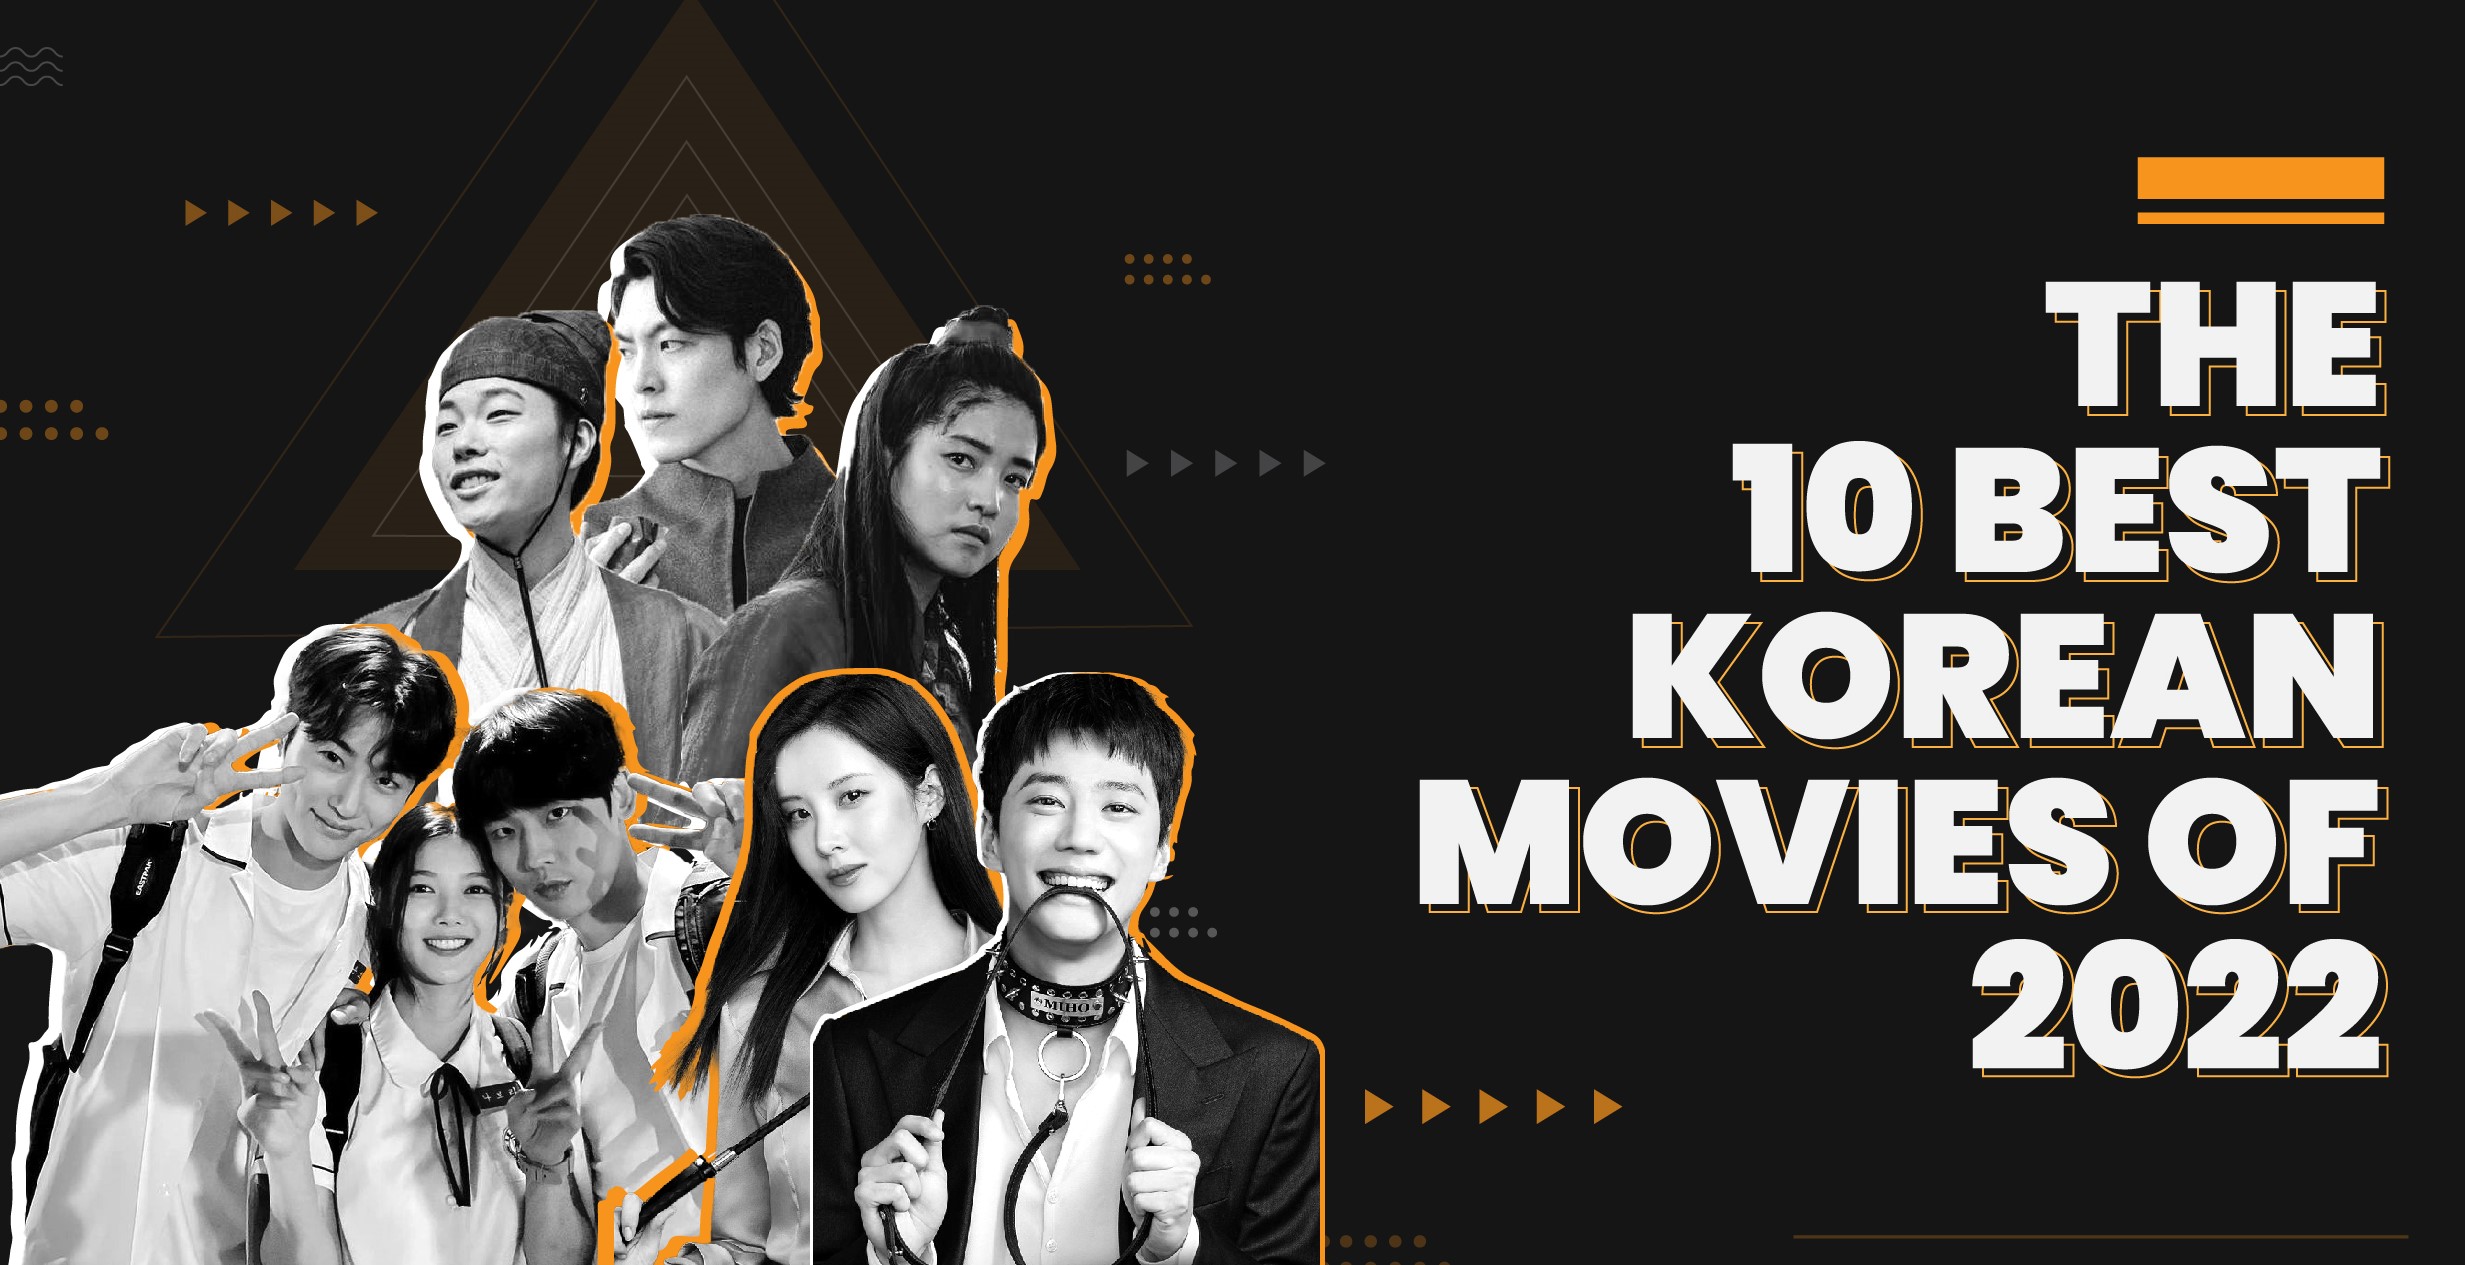 The 10 Best Korean Movies of 2022